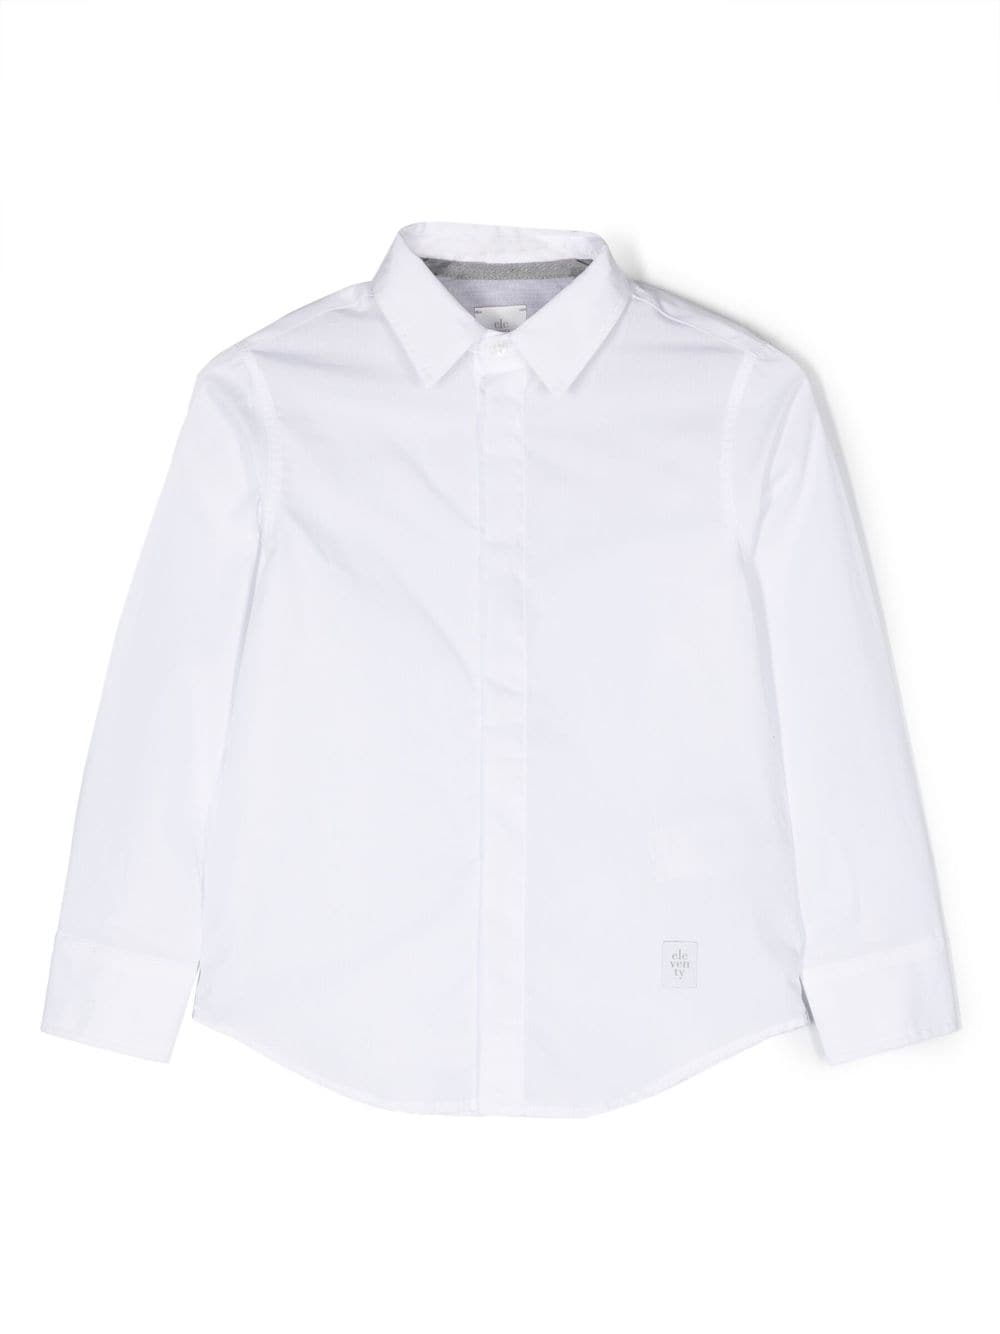 Eleventy Kids long-sleeve cotton shirt - White von Eleventy Kids